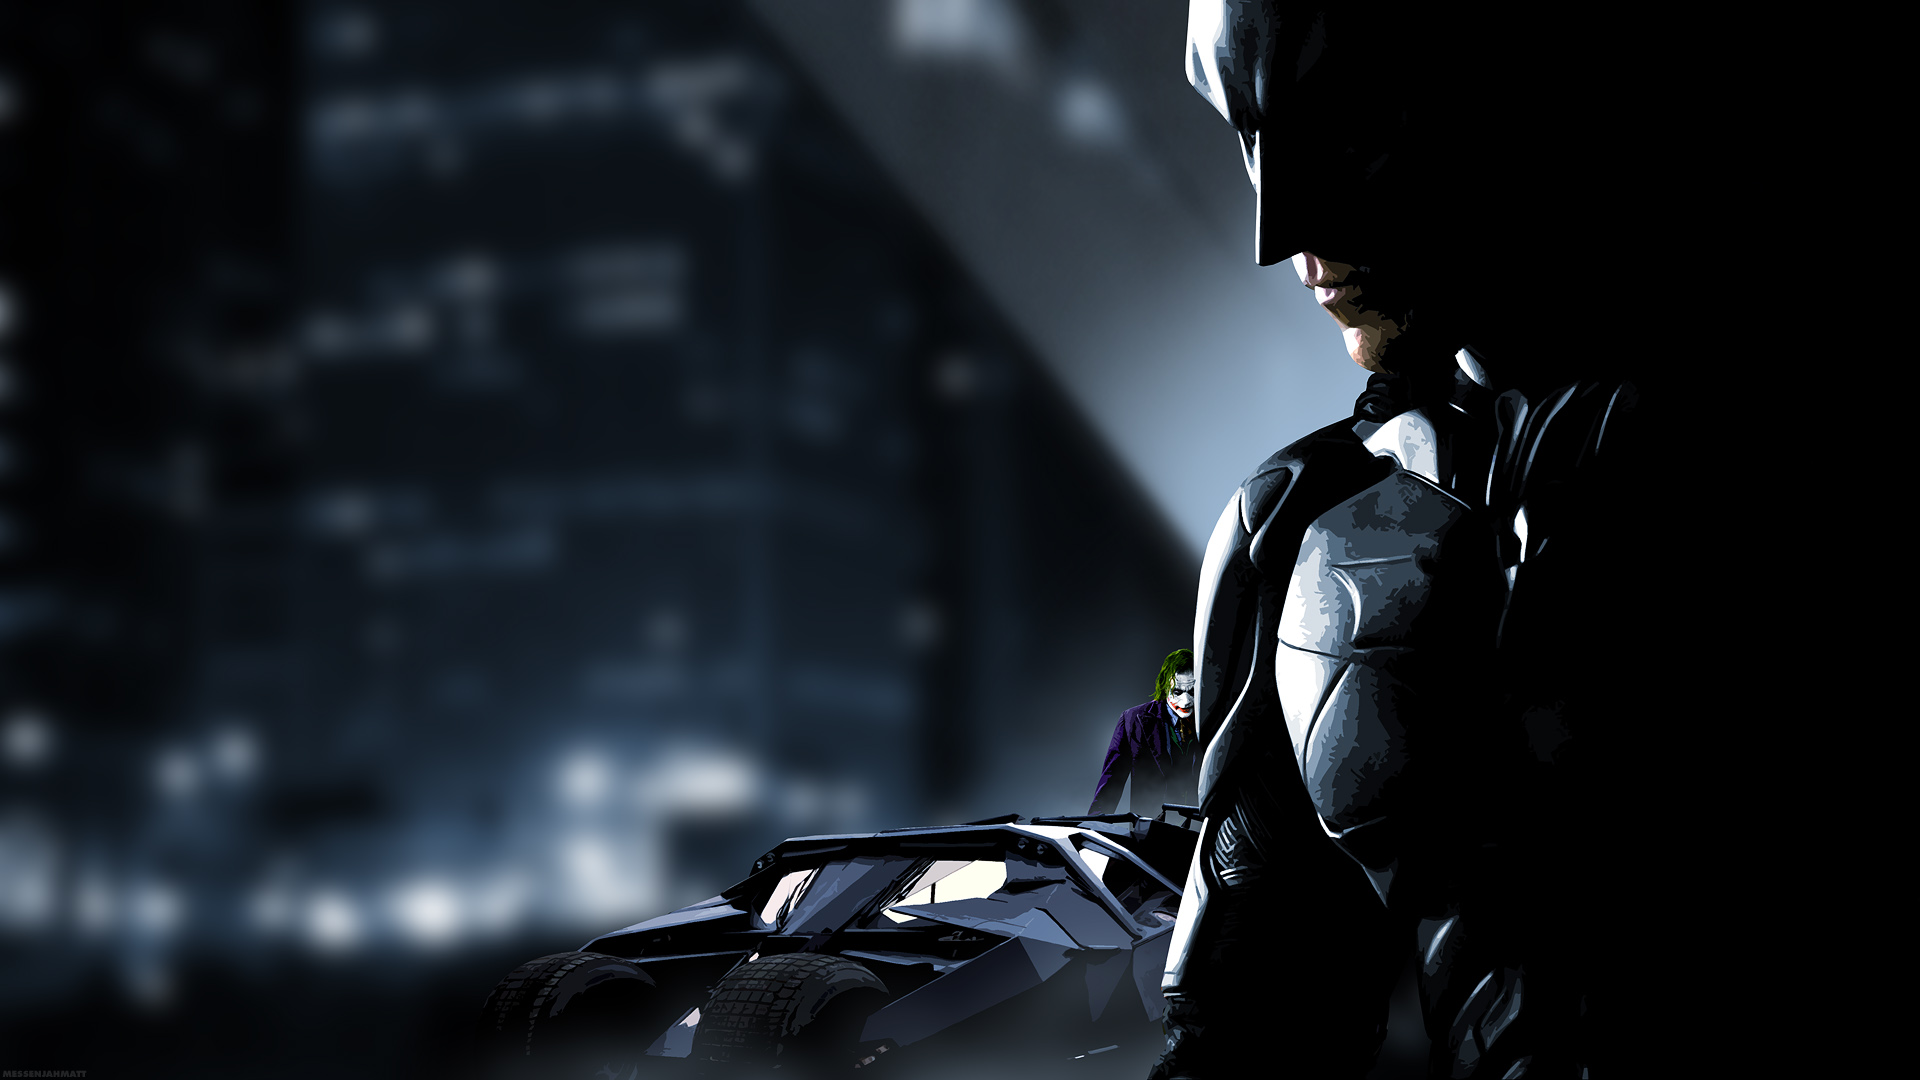 Batman Wallpaper HD Background